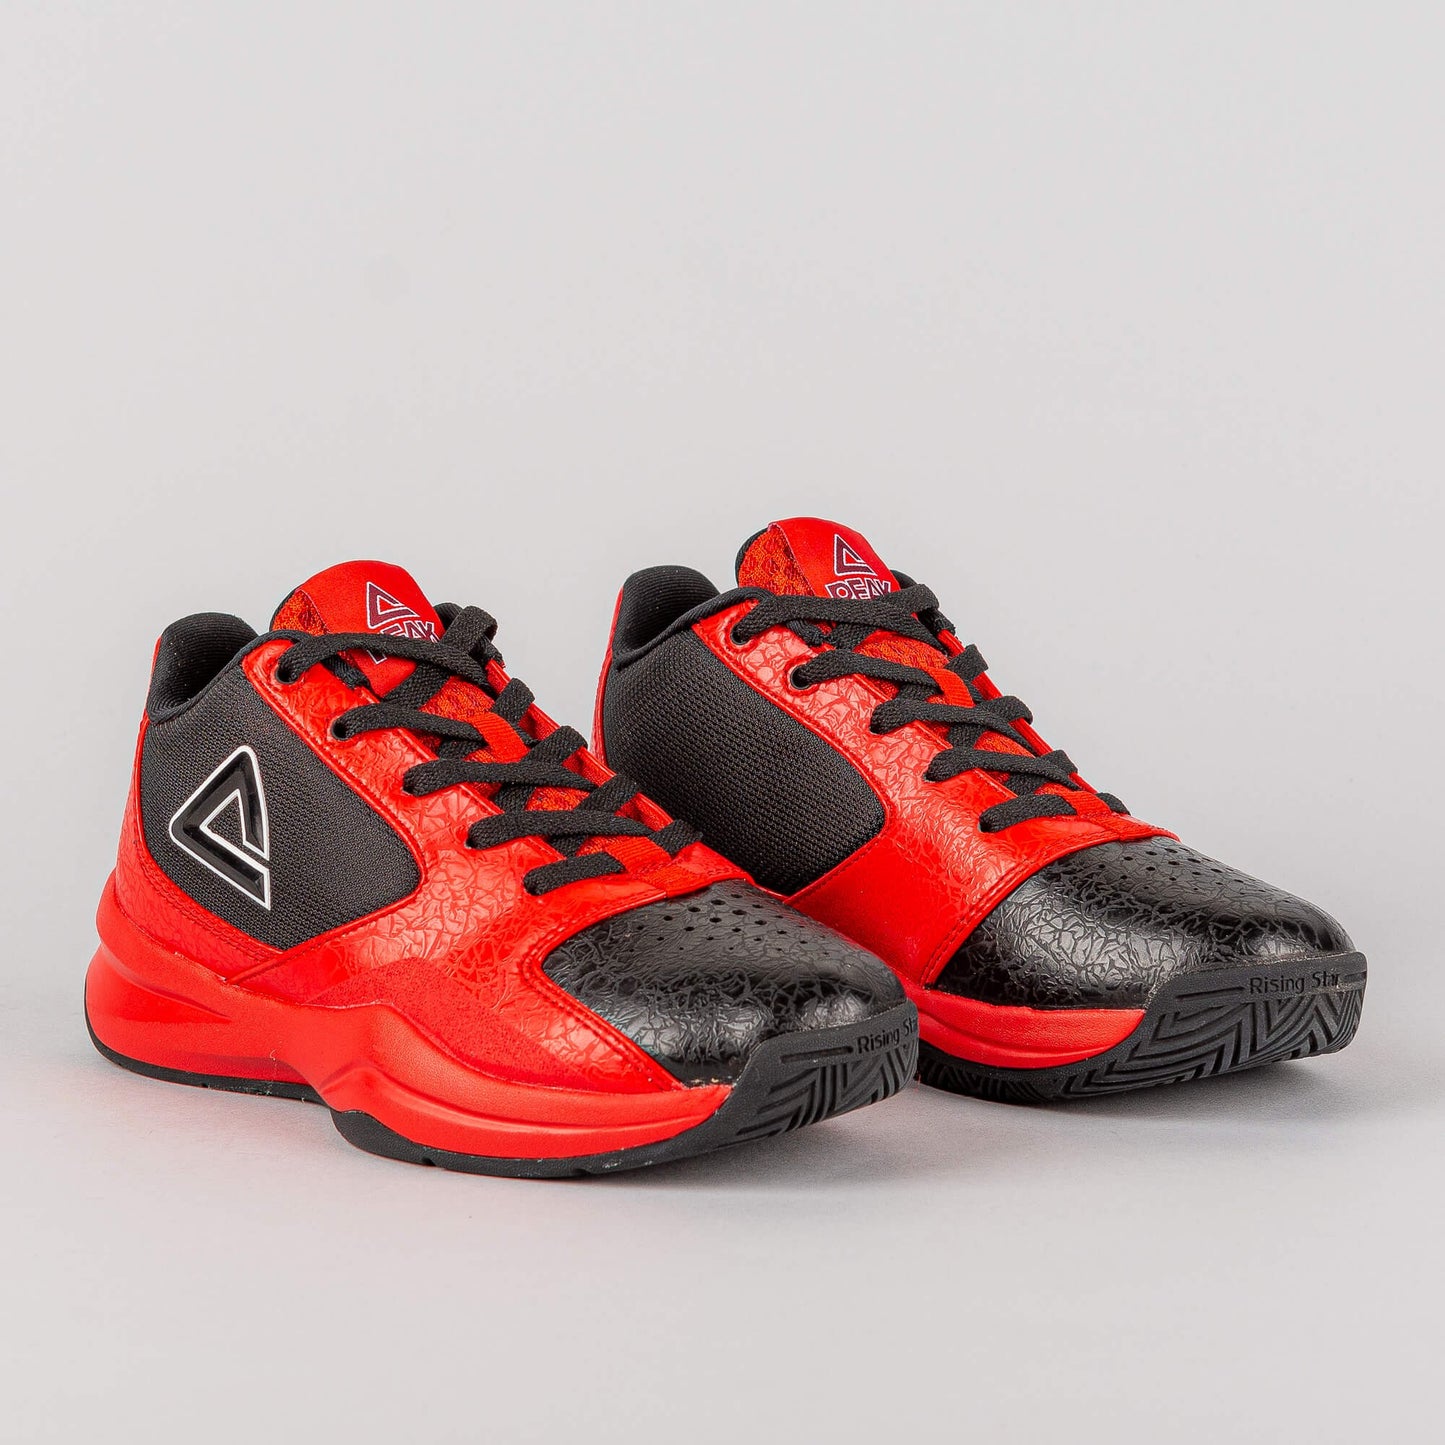 PEAK Basketball Shoes Nova Black/Red